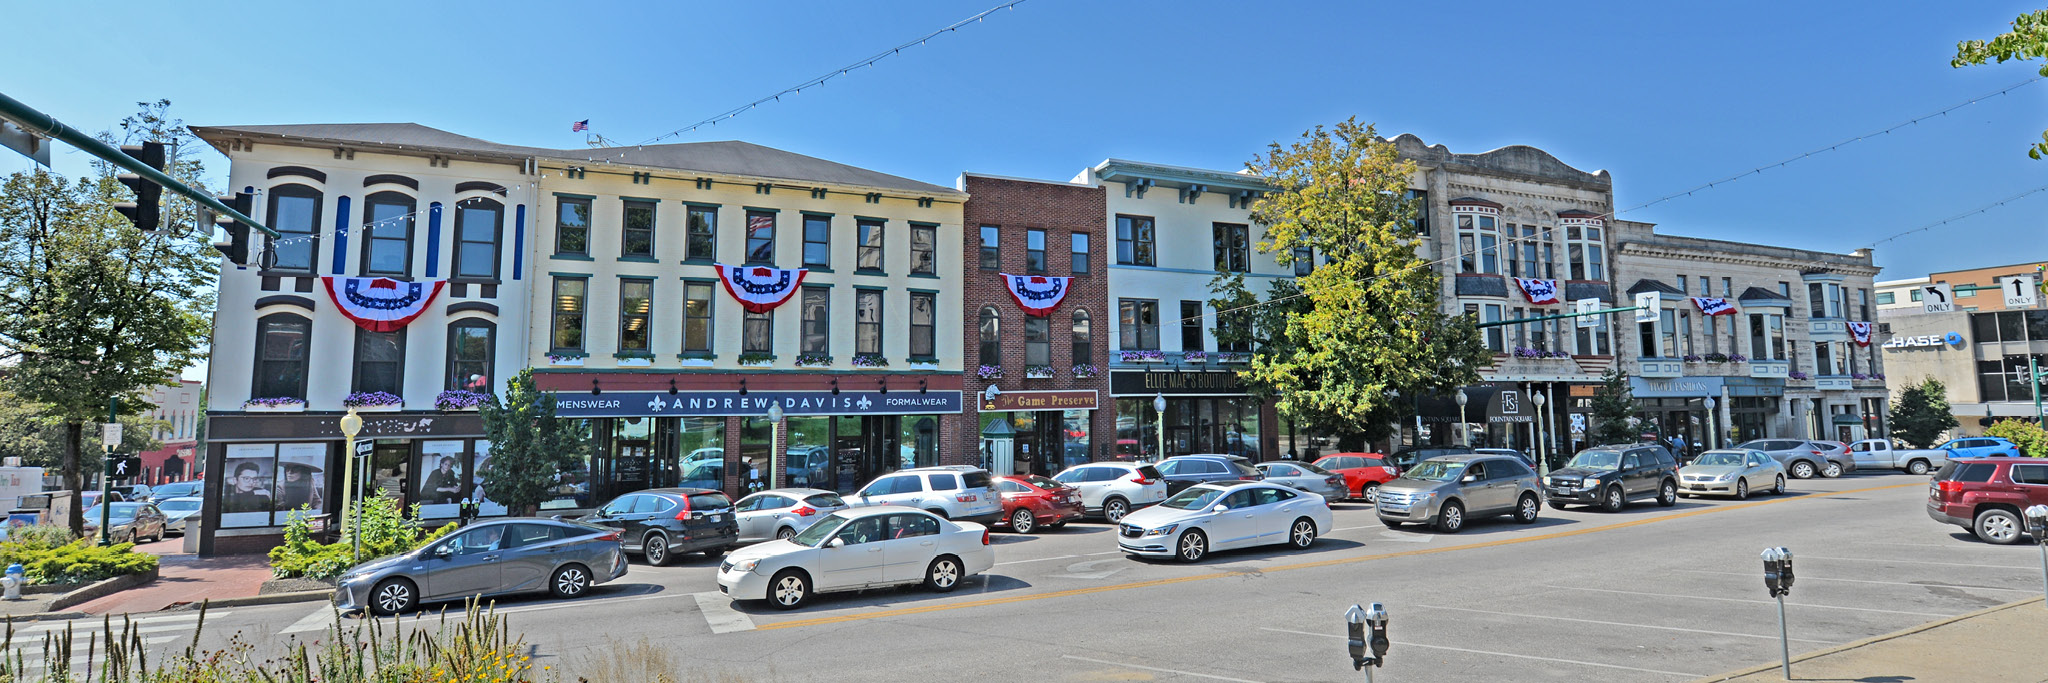 W. Kirkwood Avenue shops on Bloomington’s Historic Downtown Square.